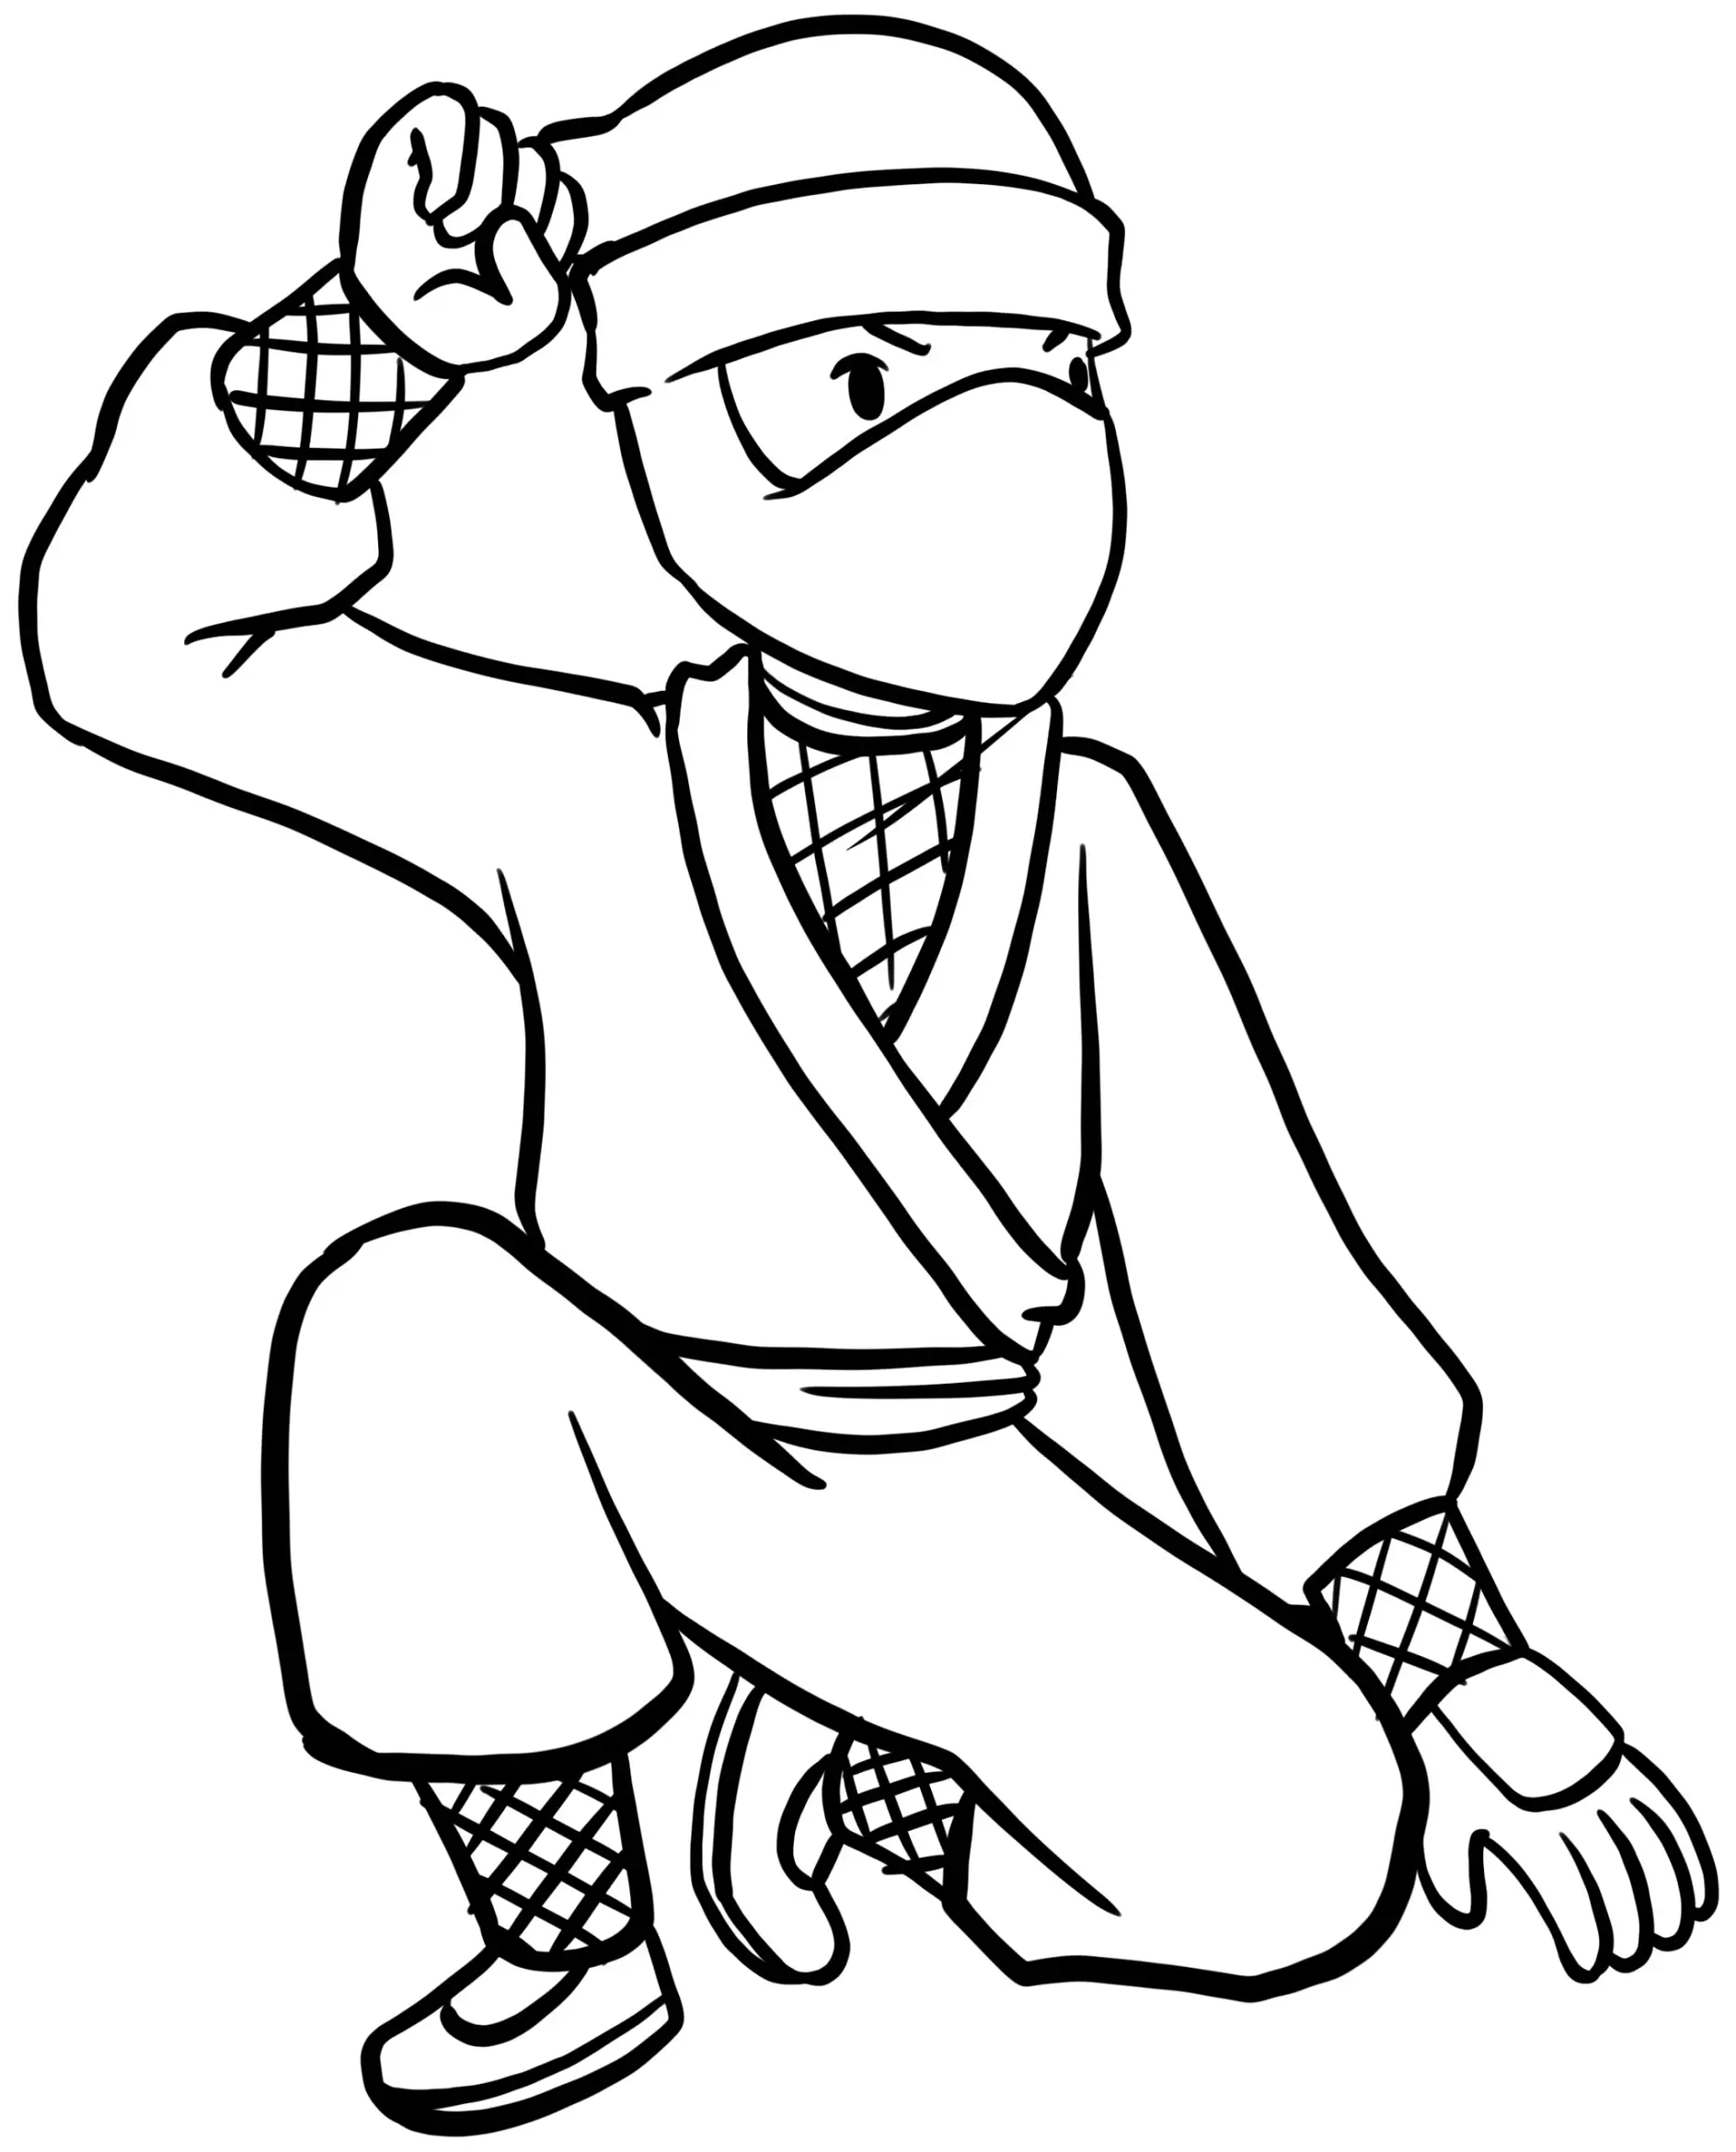 cartoon japanese ninja character for coloring book